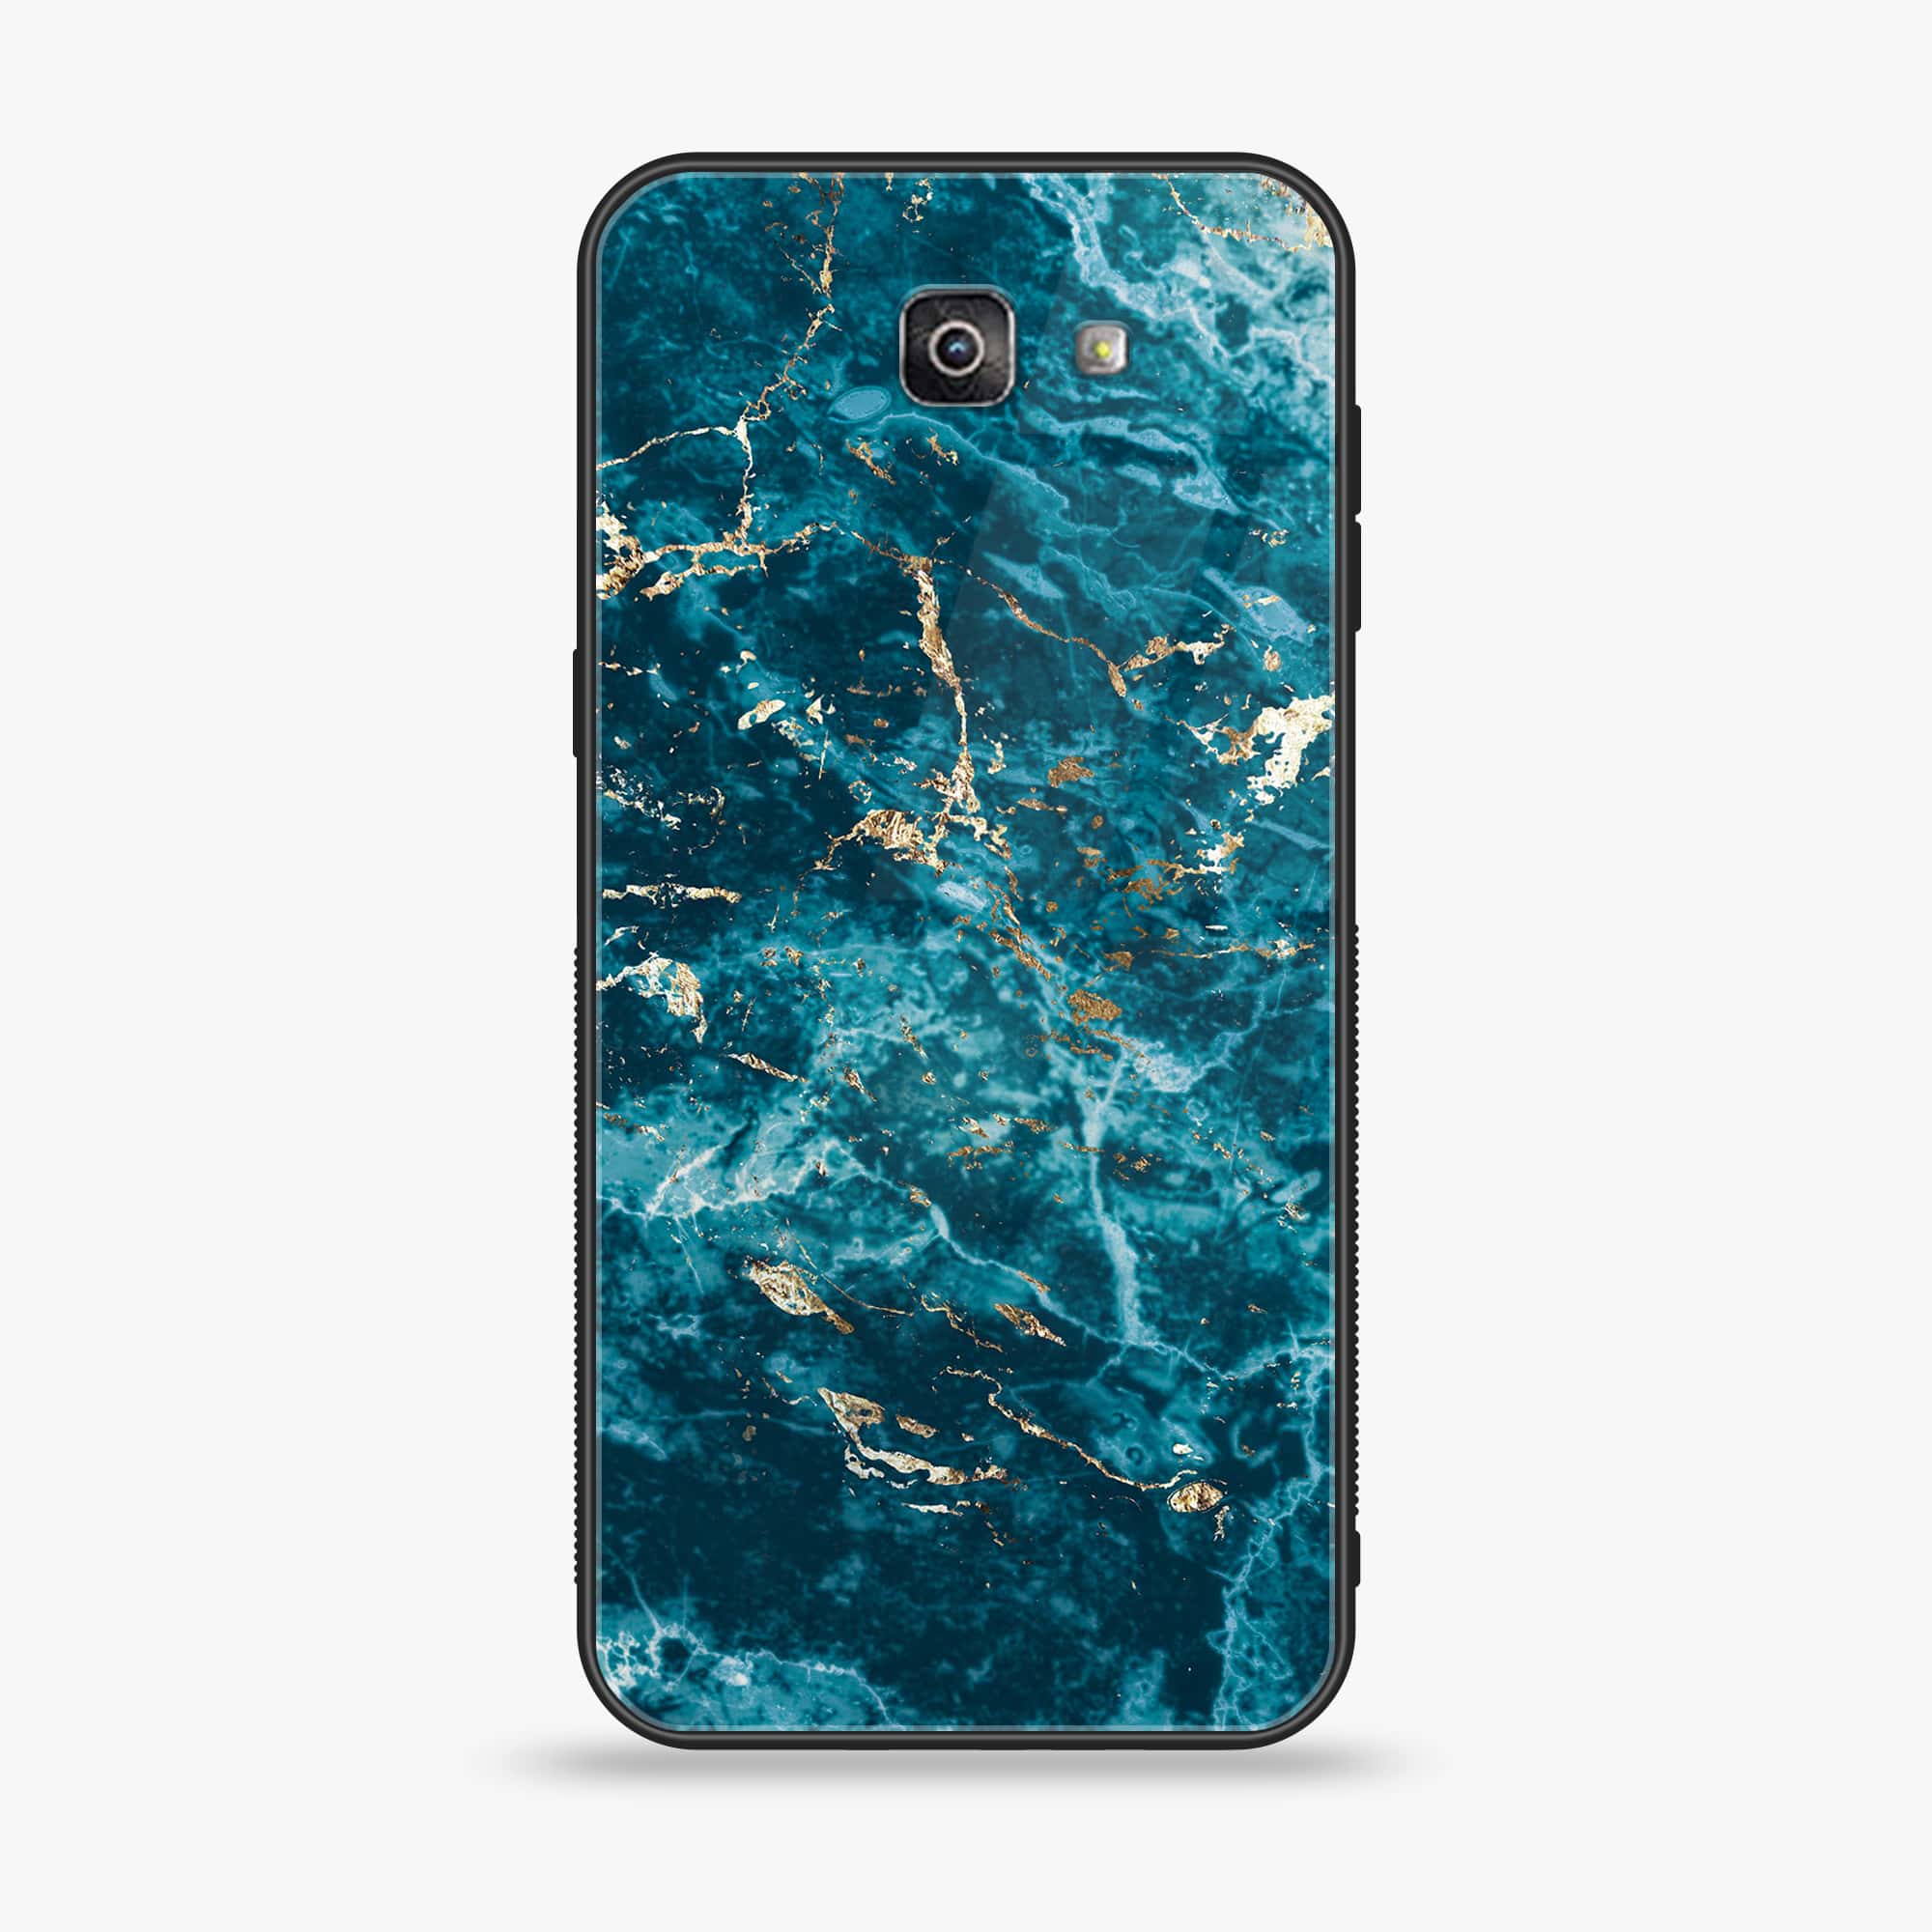 Galaxy J7 Prime - Blue Marble 2.0 Series - Premium Printed Glass soft Bumper shock Proof Case